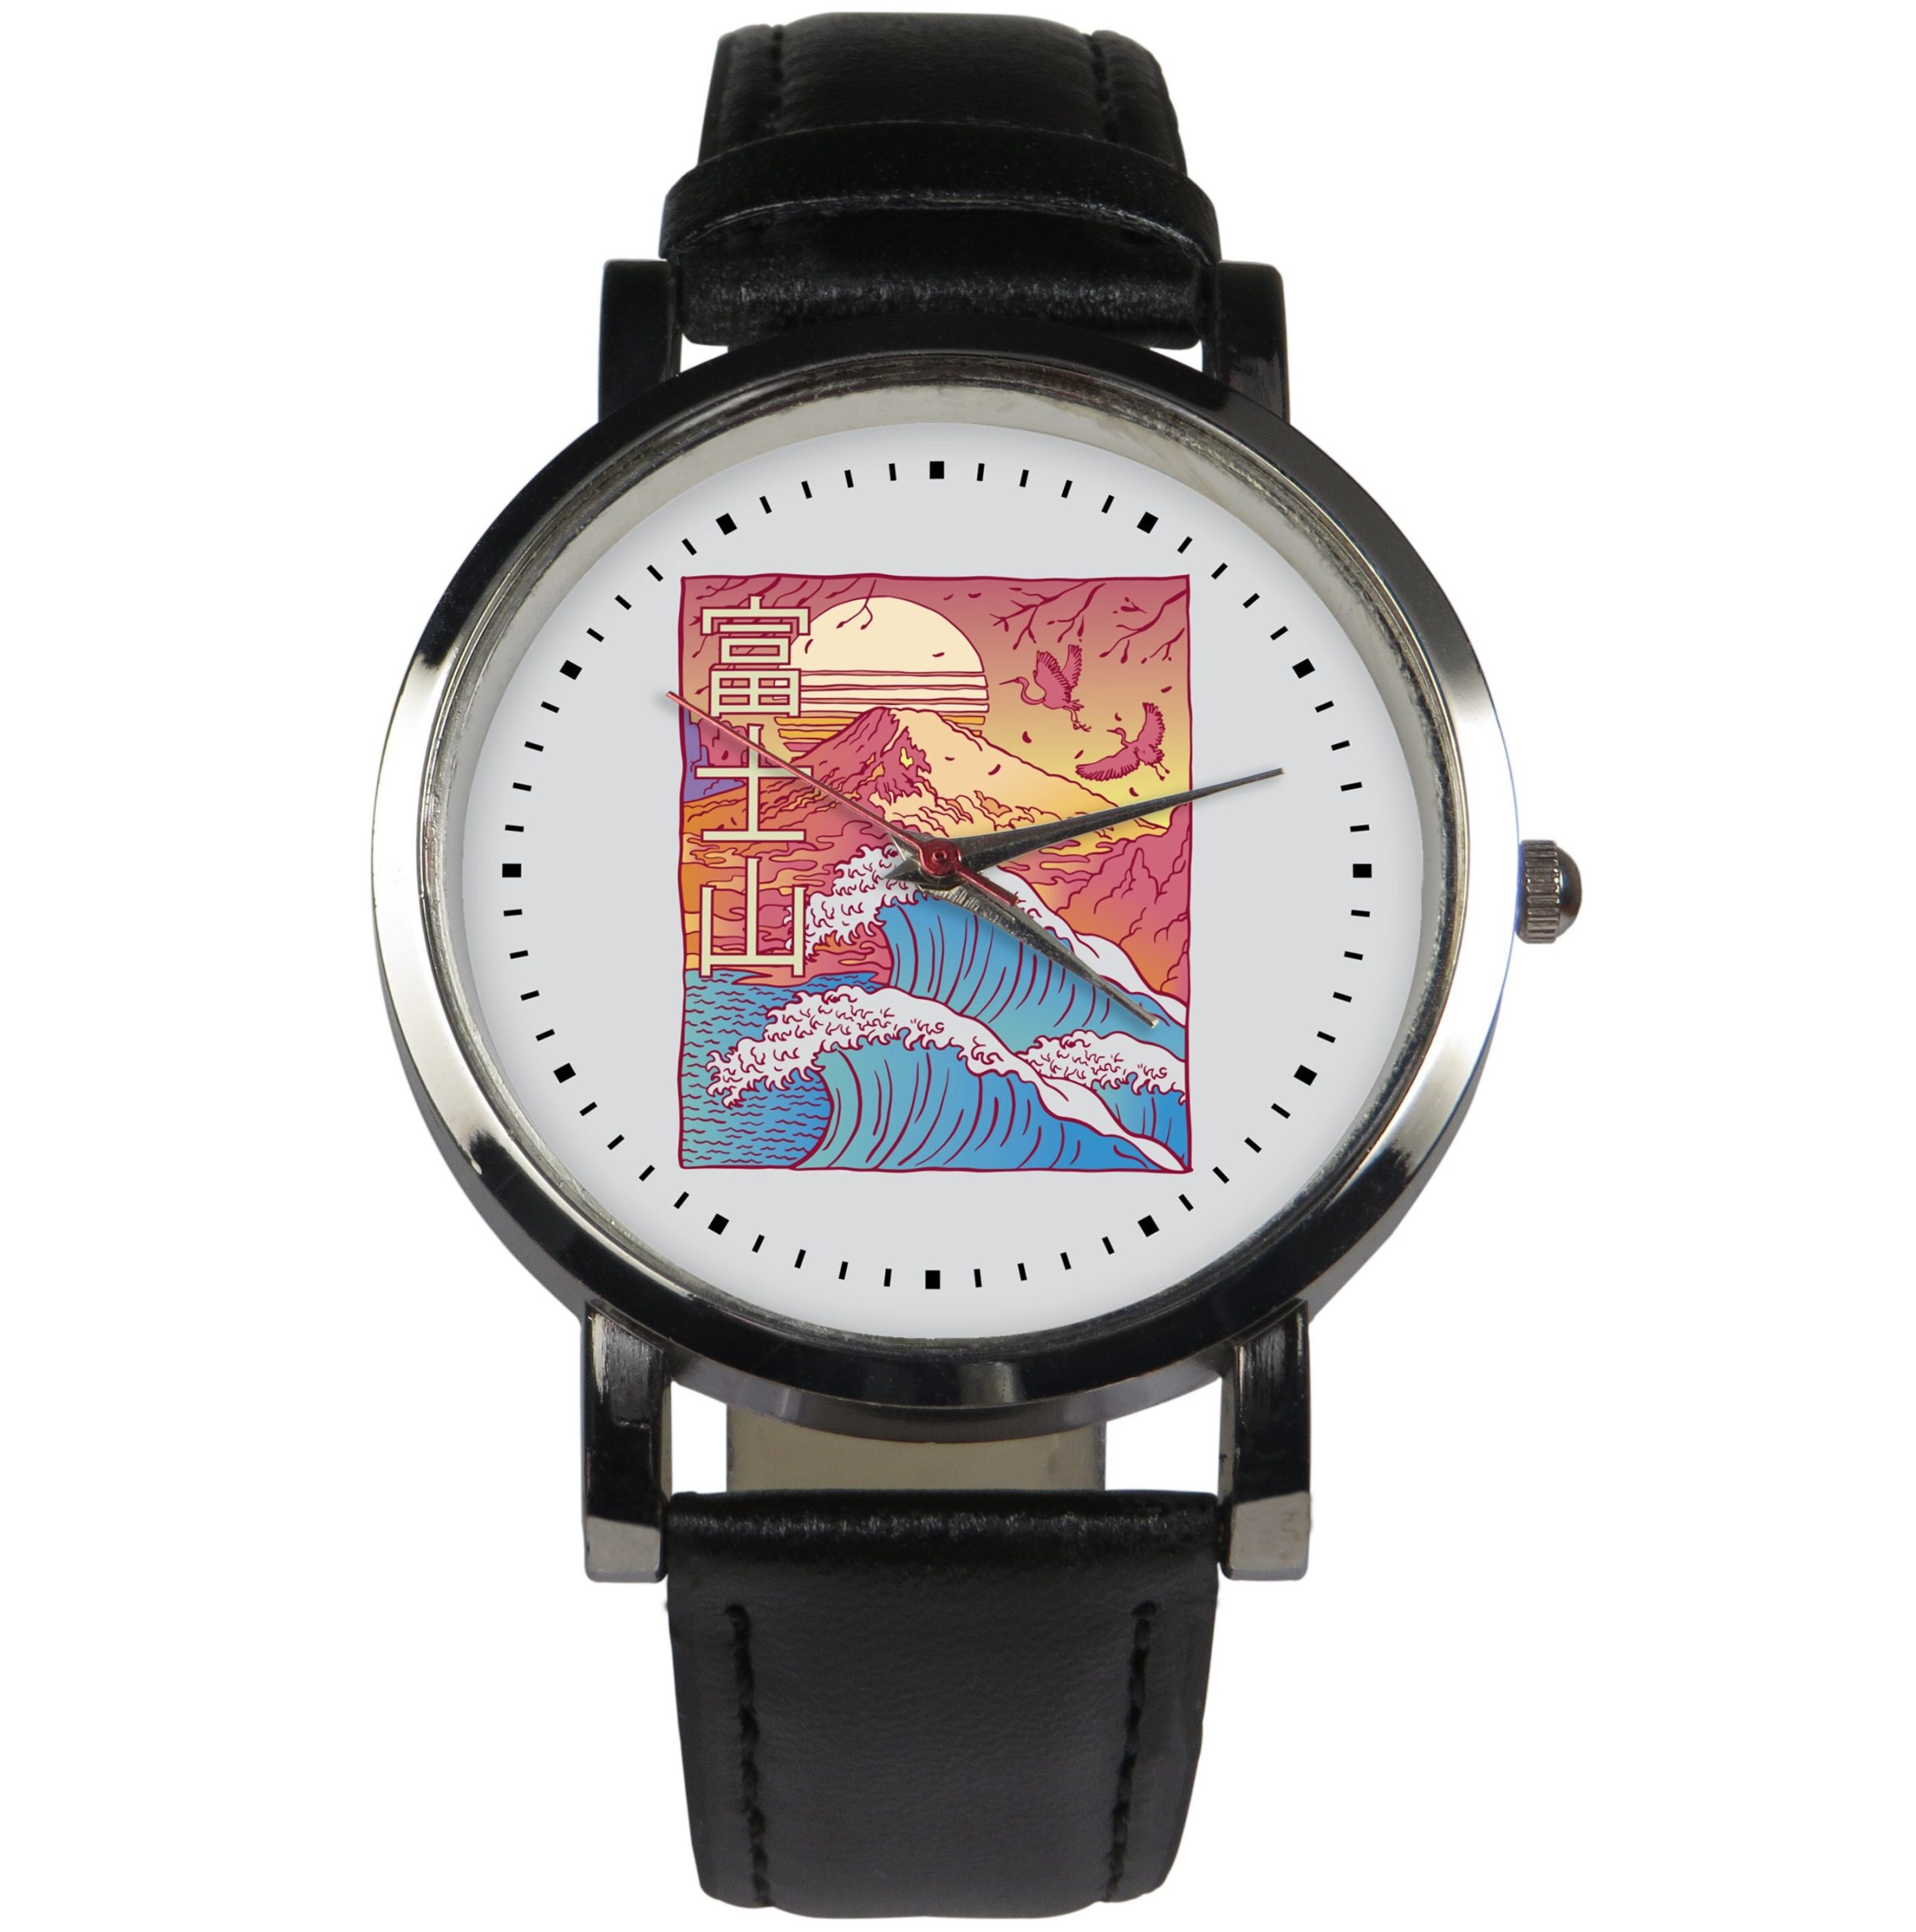 Mount Fuji watch design